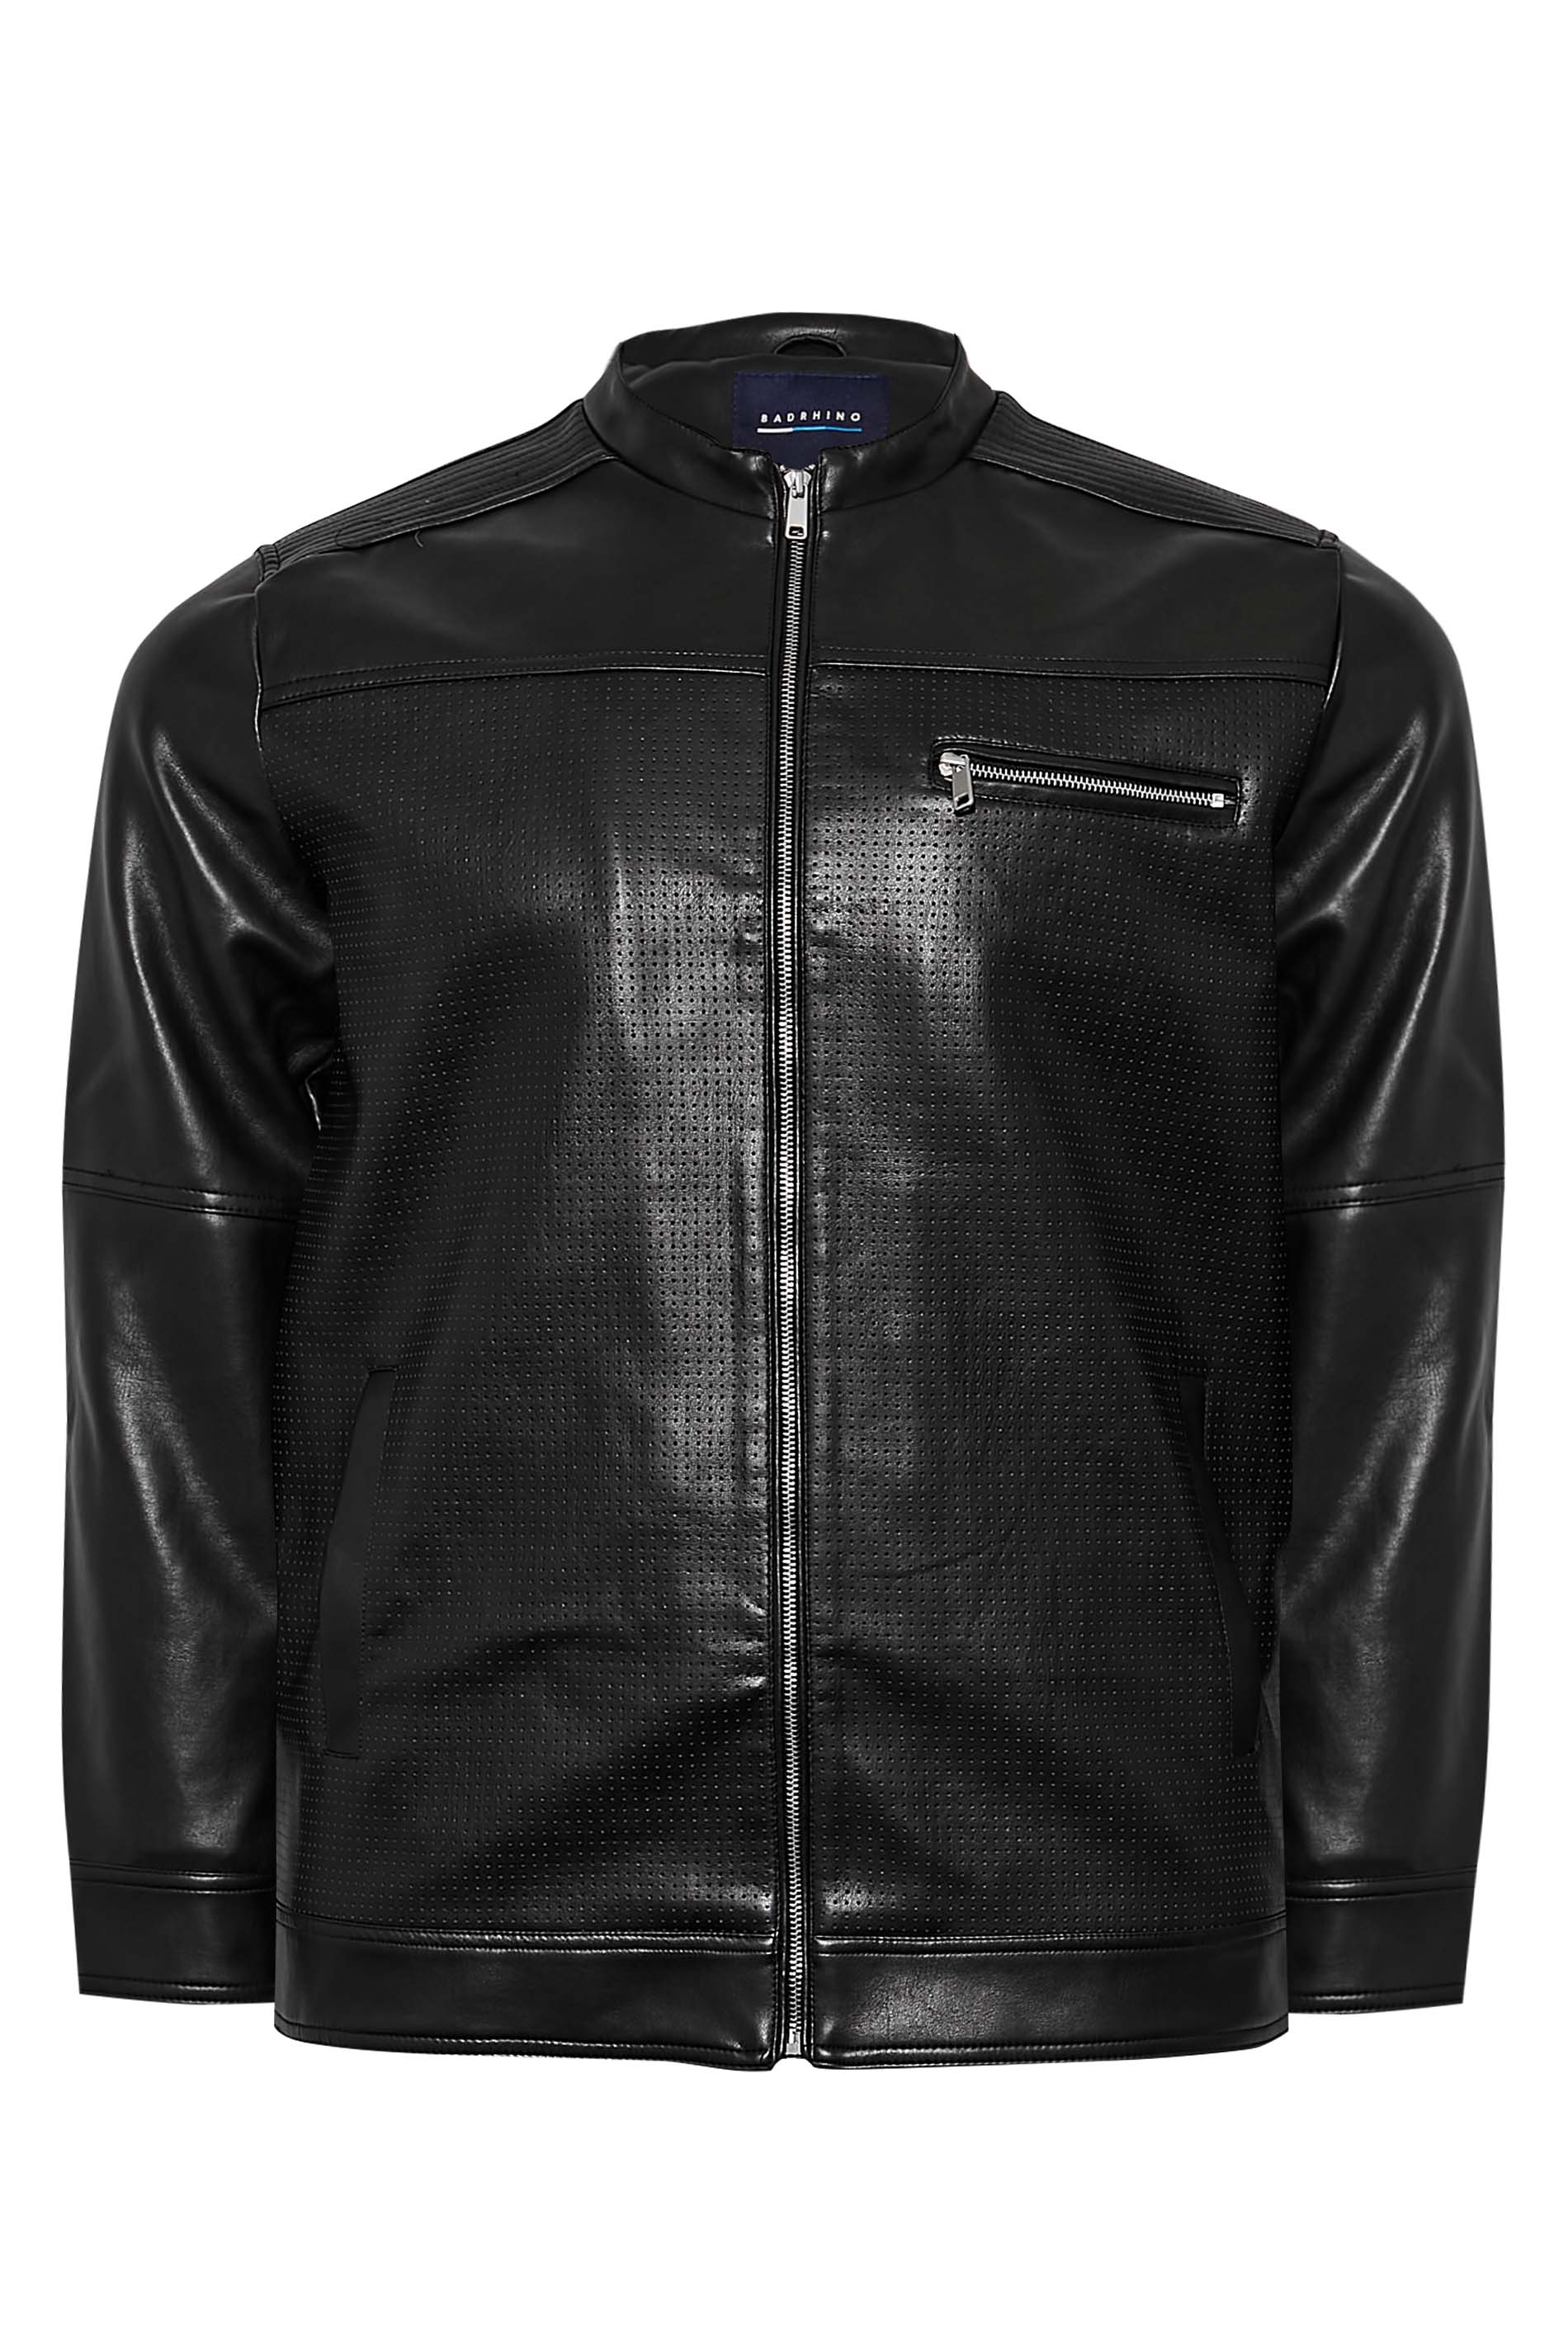 BadRhino Big & Tall Black Faux Leather Jacket | BadRhino 2